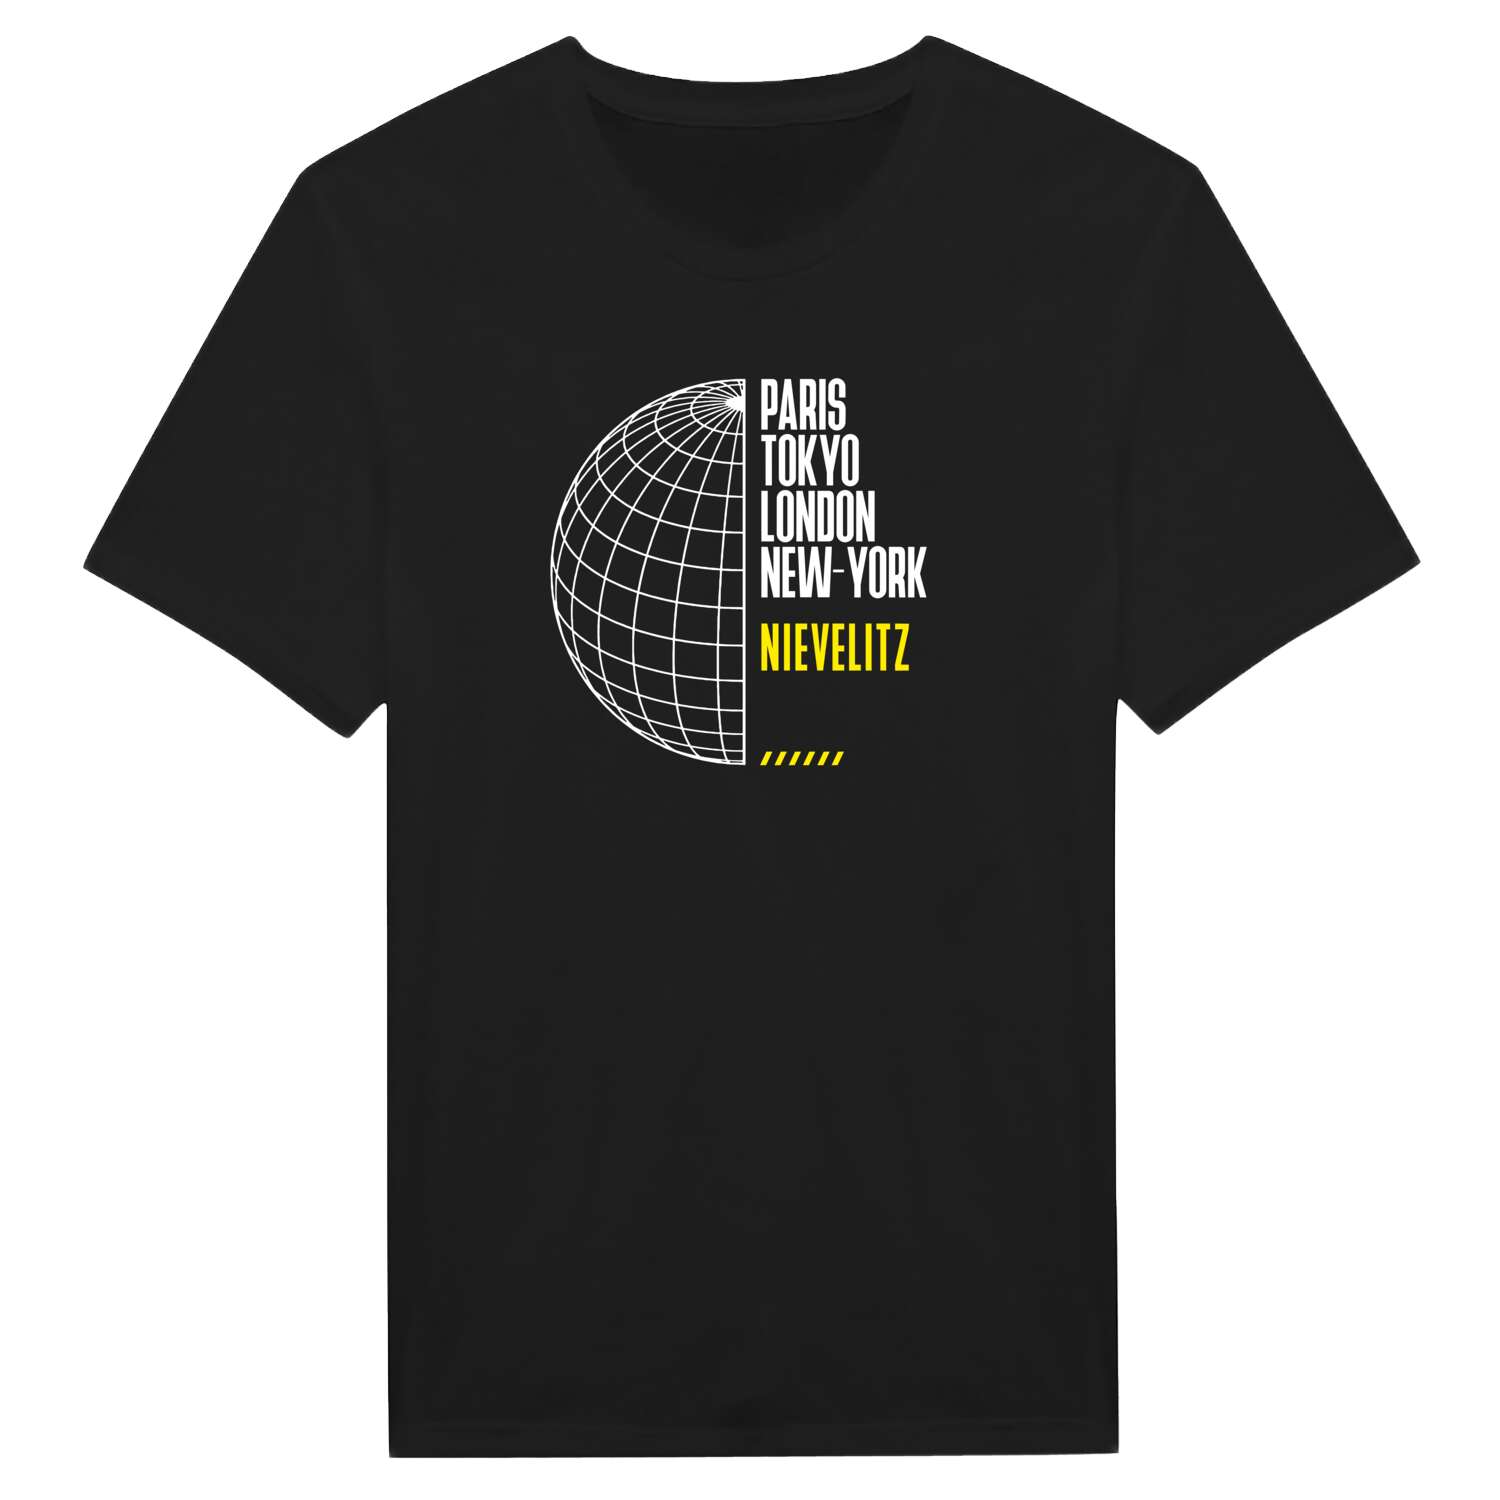 Nievelitz T-Shirt »Paris Tokyo London«